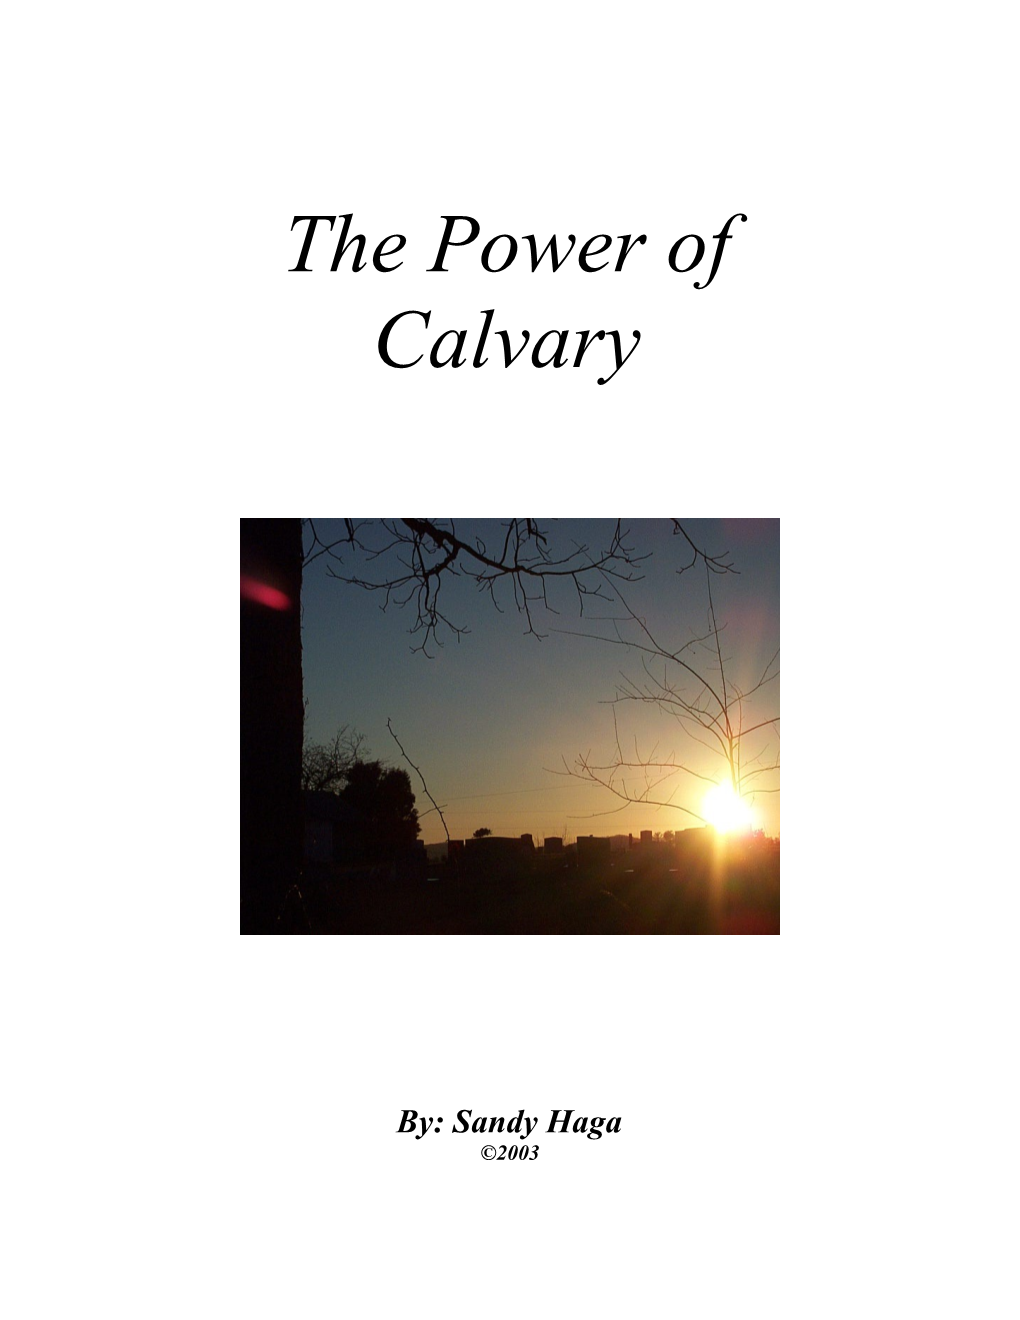 The Power of Calvary